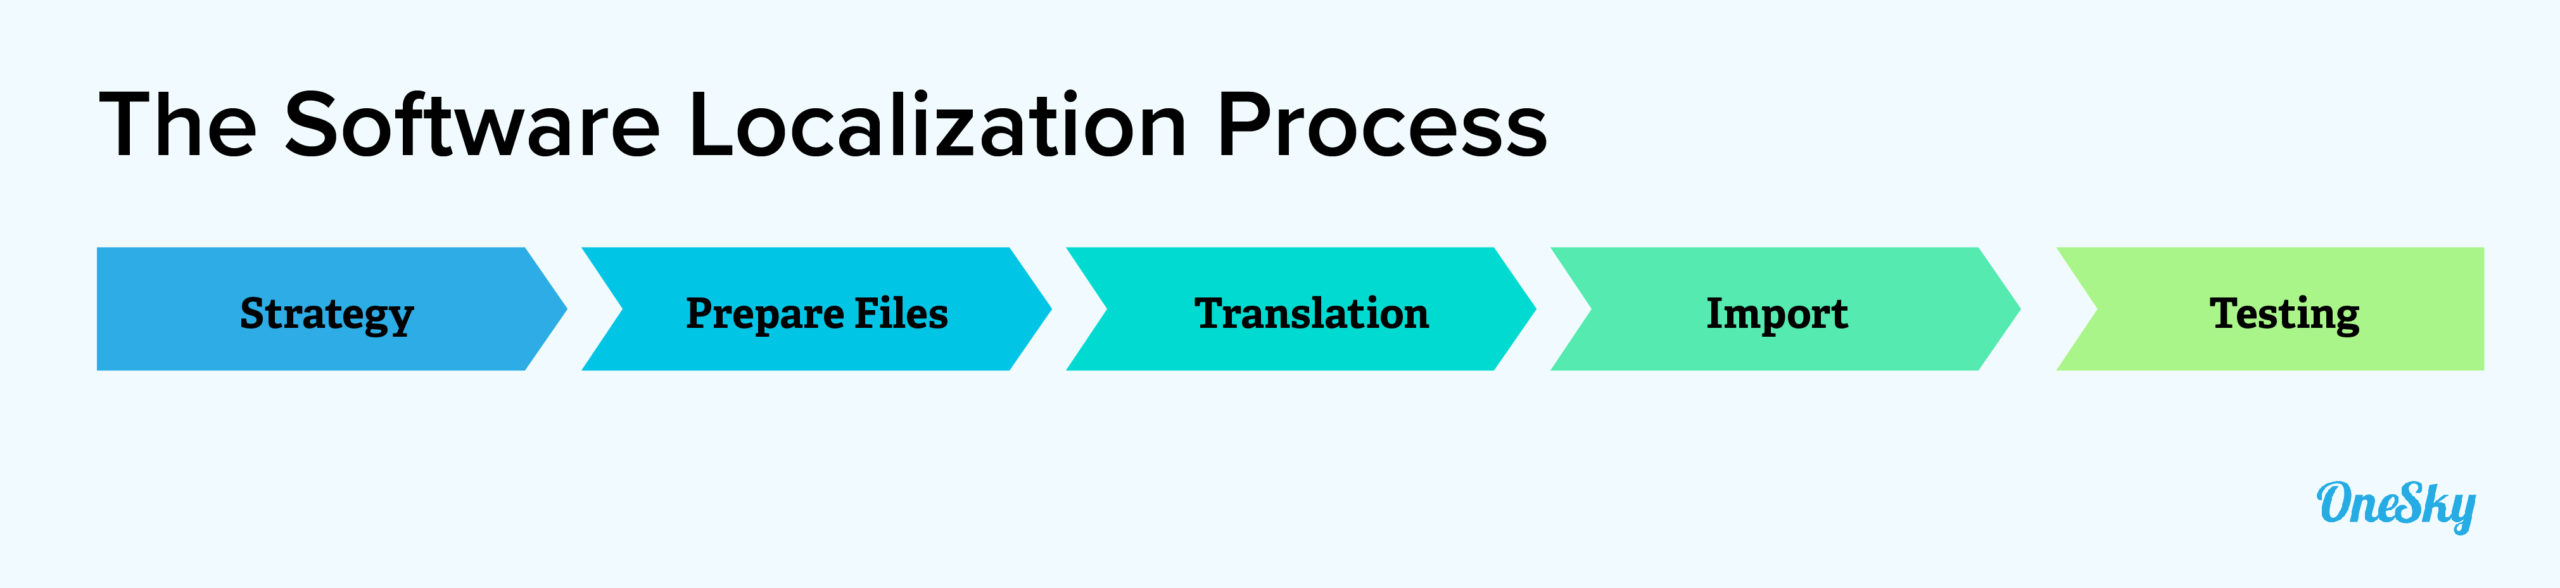 software localization process